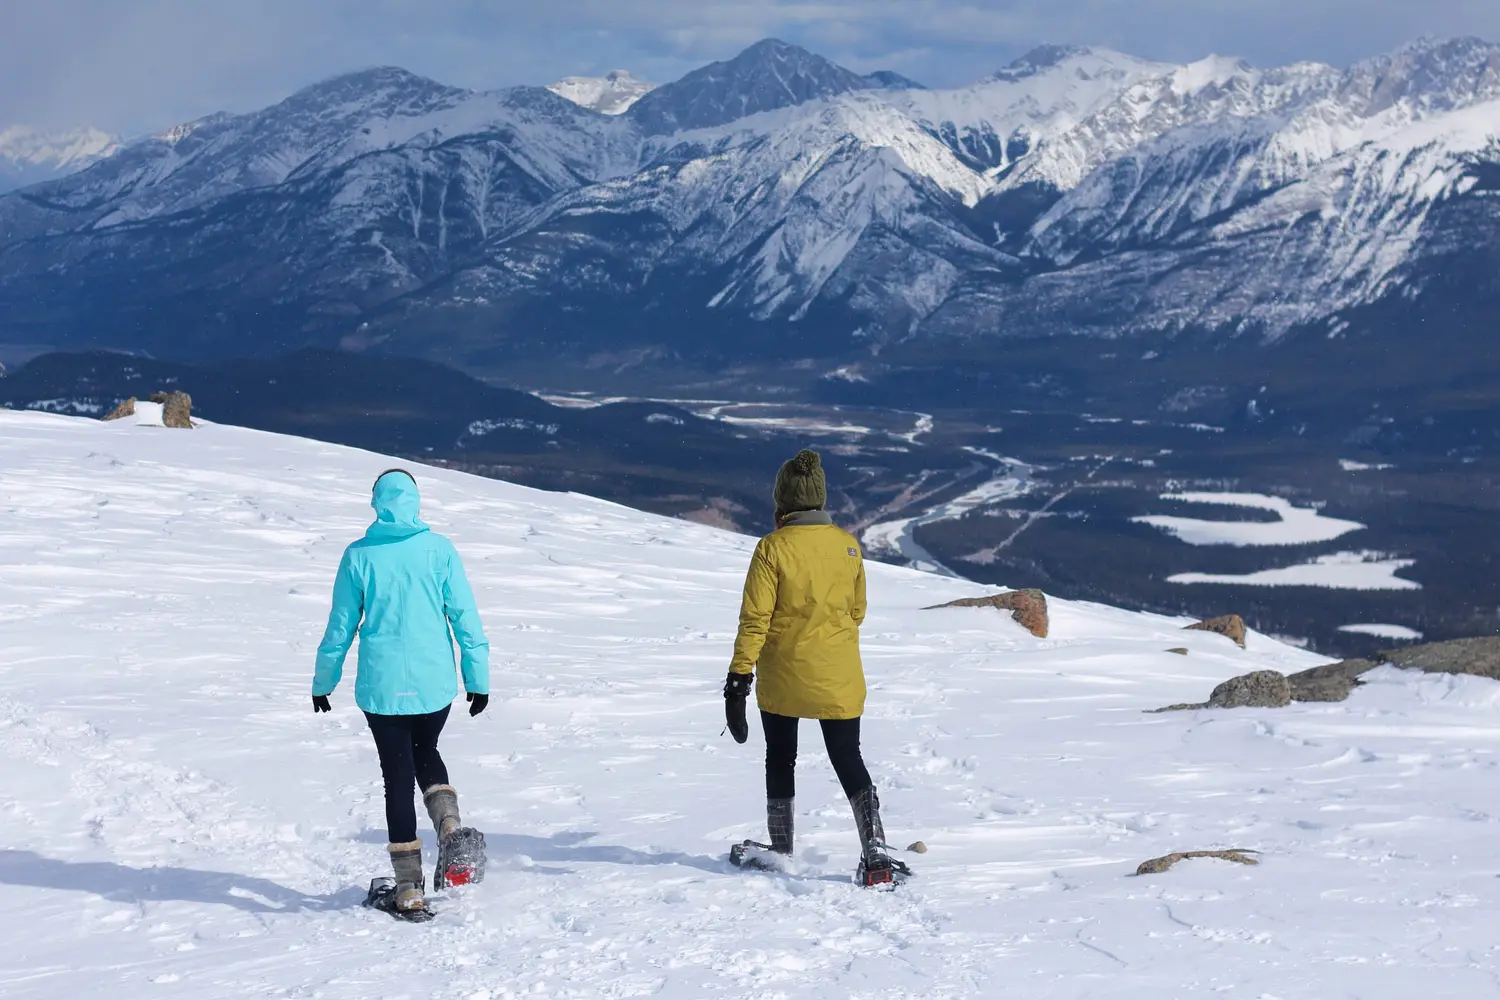 People snow shoeing in Jasper, Canada